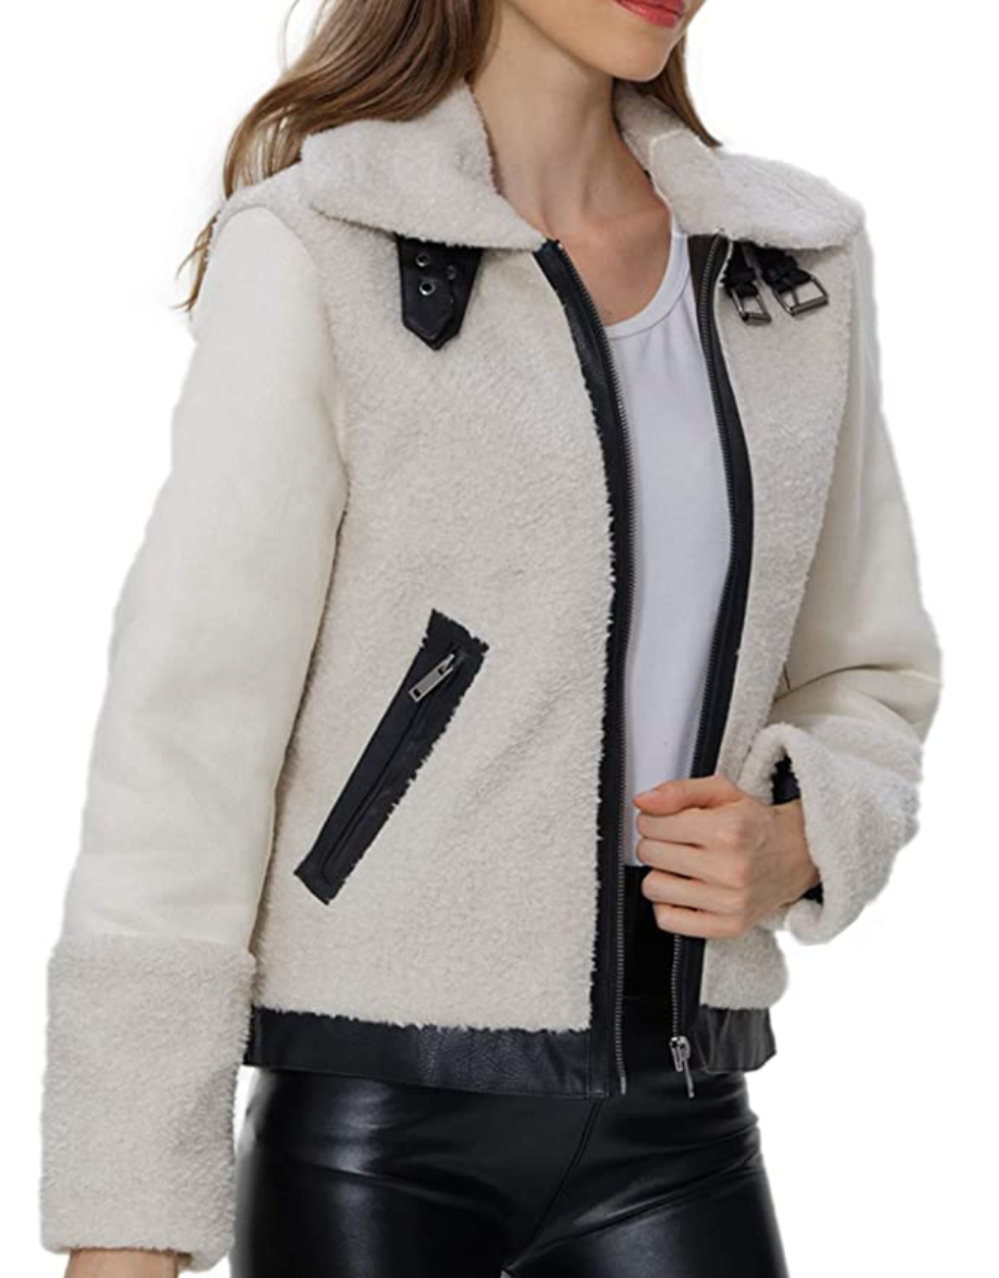 Bellivera Stylish Faux-Leather Sherpa Coat Starts at Just $29